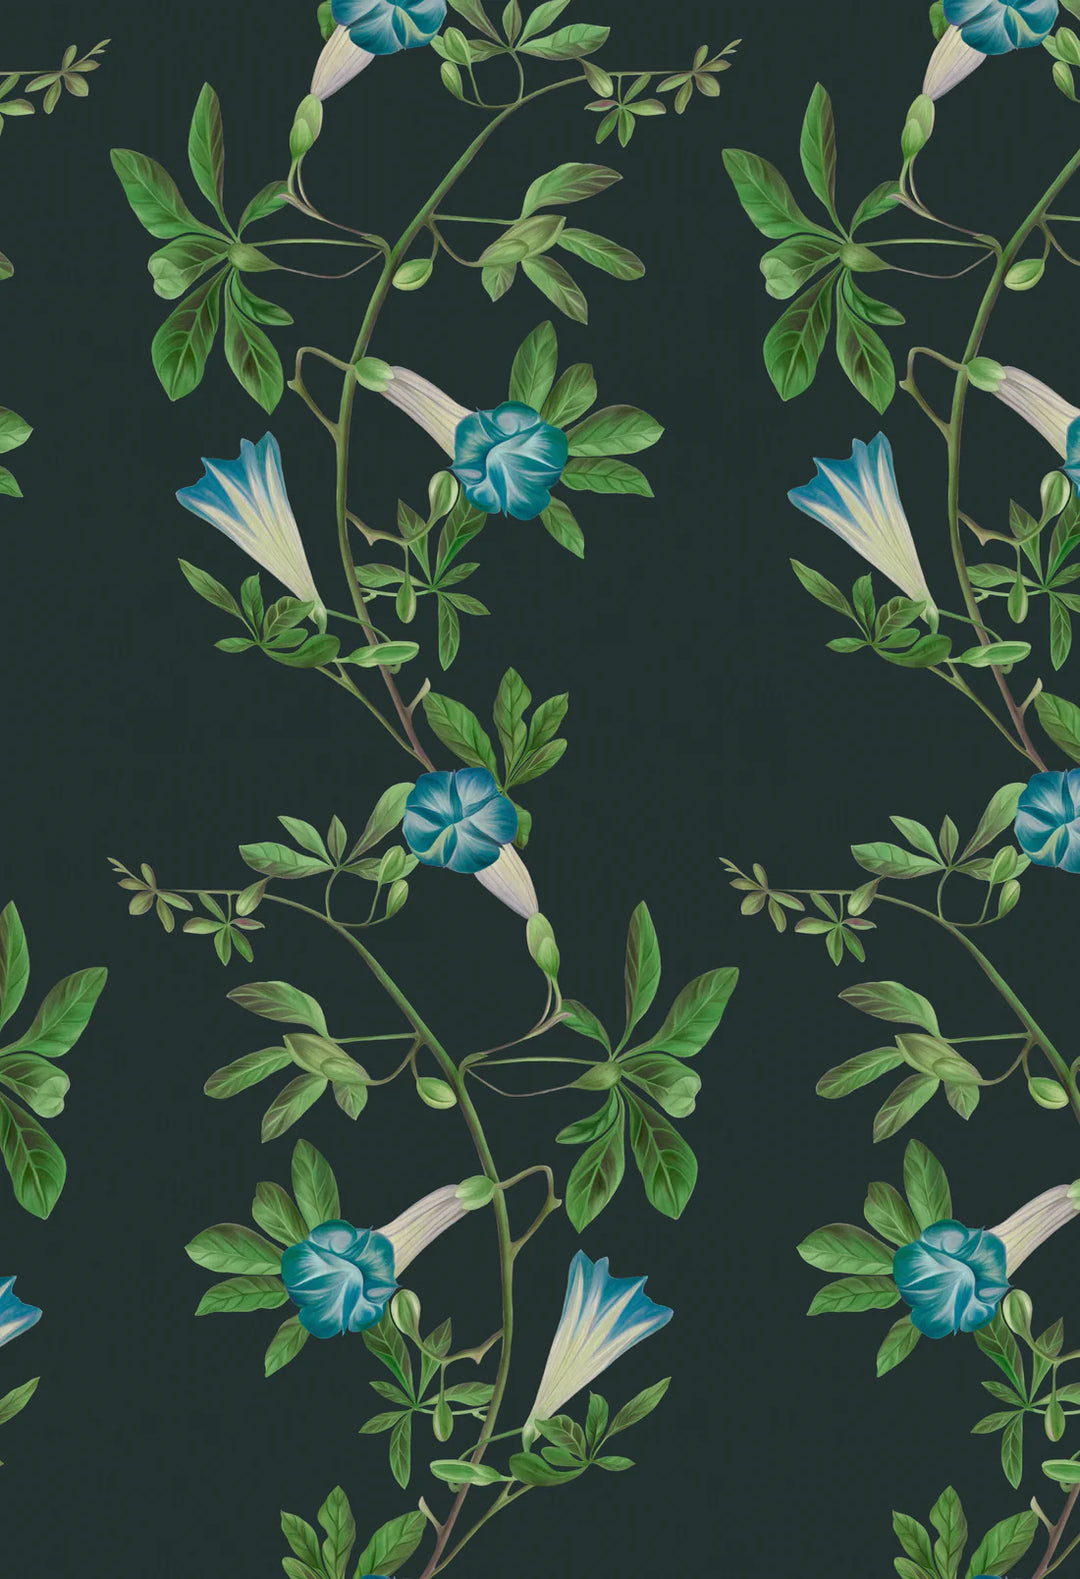 Deus-ex-gardenia-wallpaper-Midsummer-wallpaper-trialing-vines-and-flowers-french-toile-british-garden-leafy-trellis-hand-illustrated-pattern-linen-blue-green-print-on-white-background